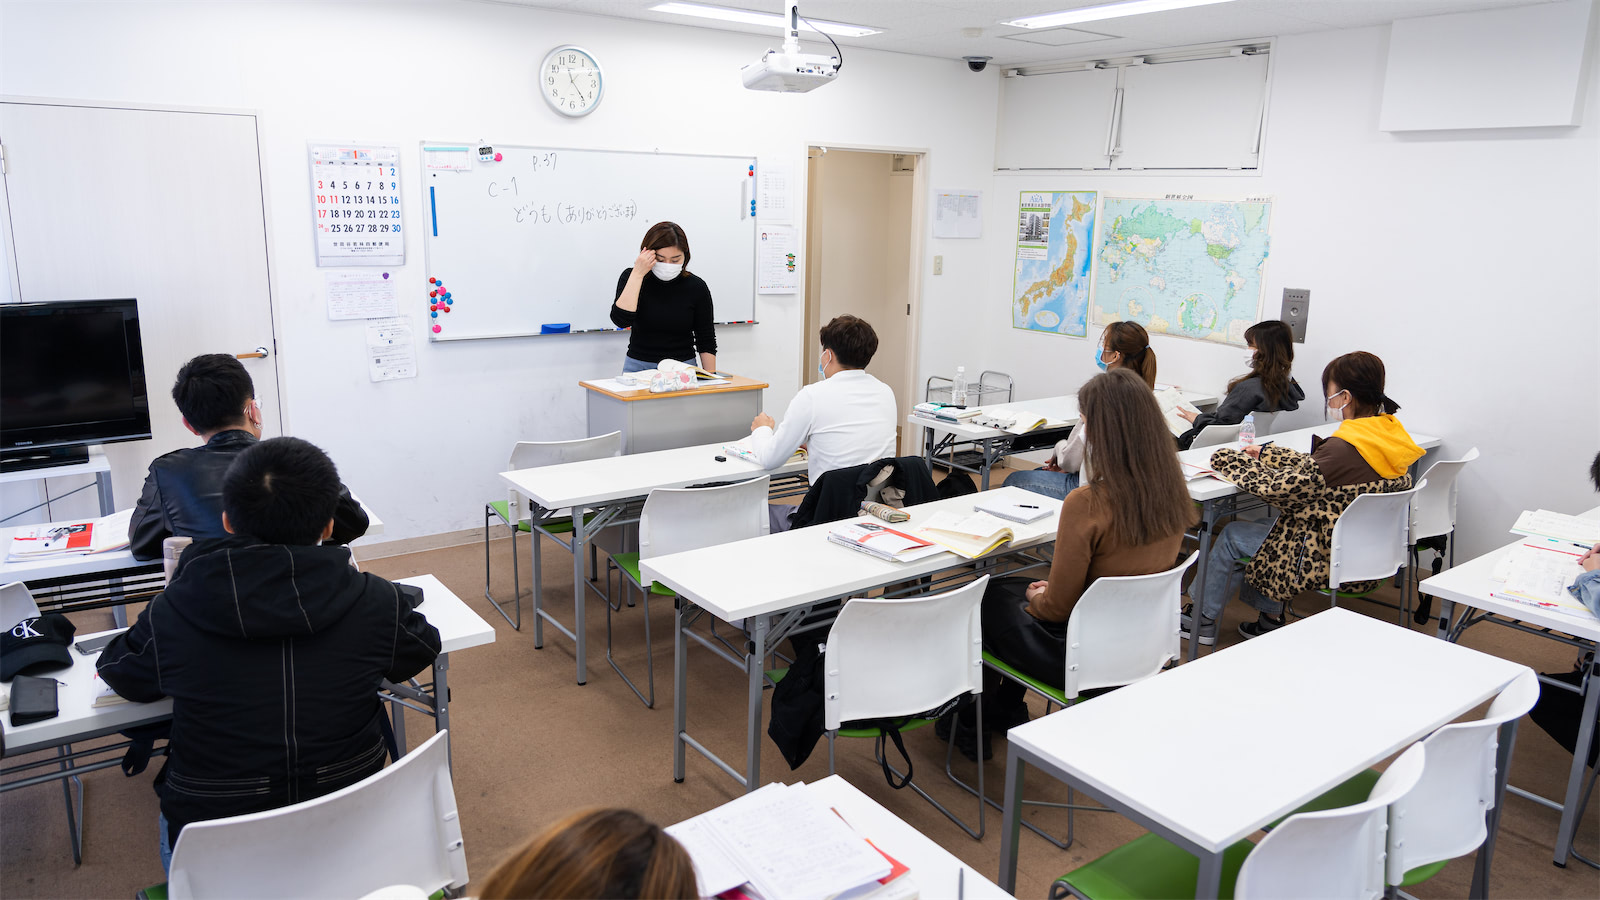 Школа японского языка IKUEI